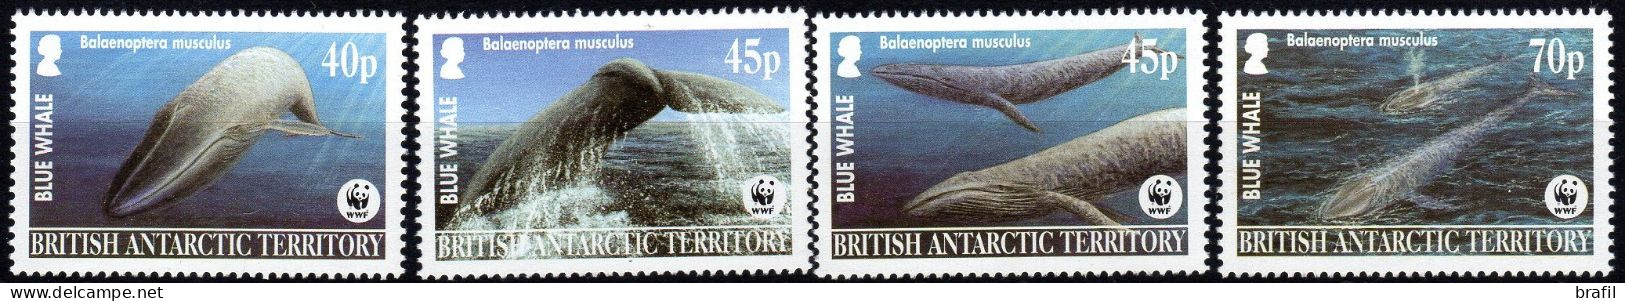 2003 Territorio Antartico Britannico, Balene, Serie Completa Nuova (**) - Unused Stamps